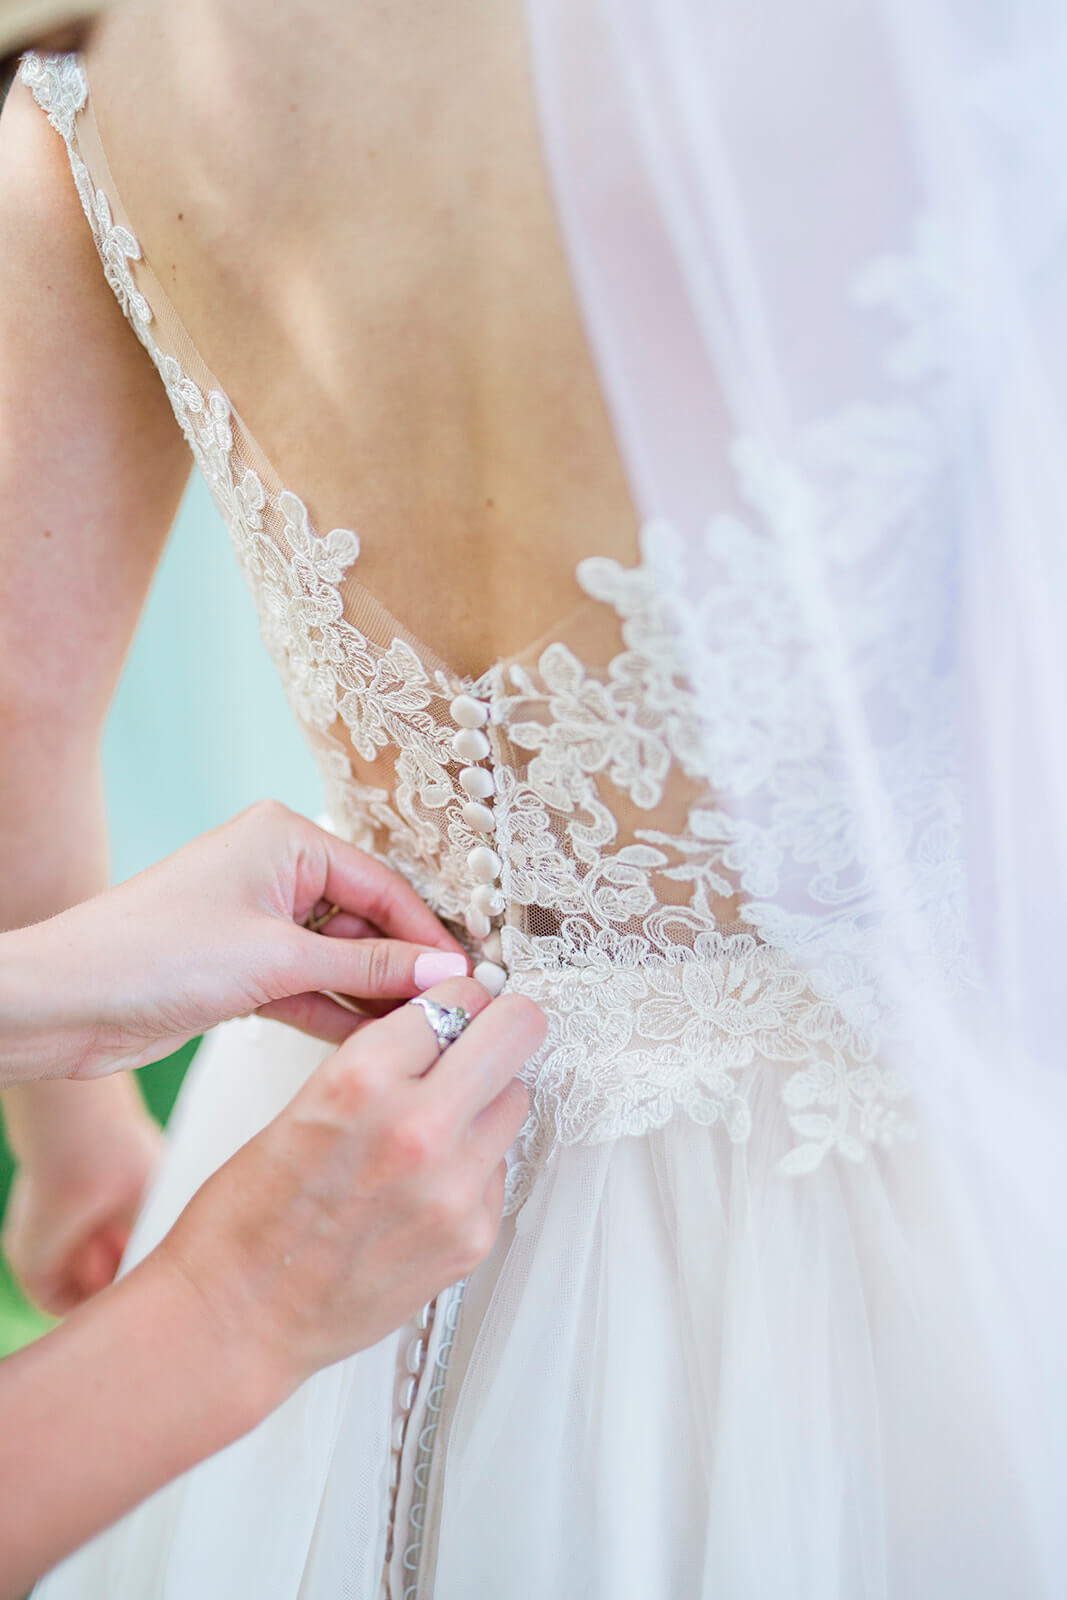 dress details, wedding dress, wedding photography